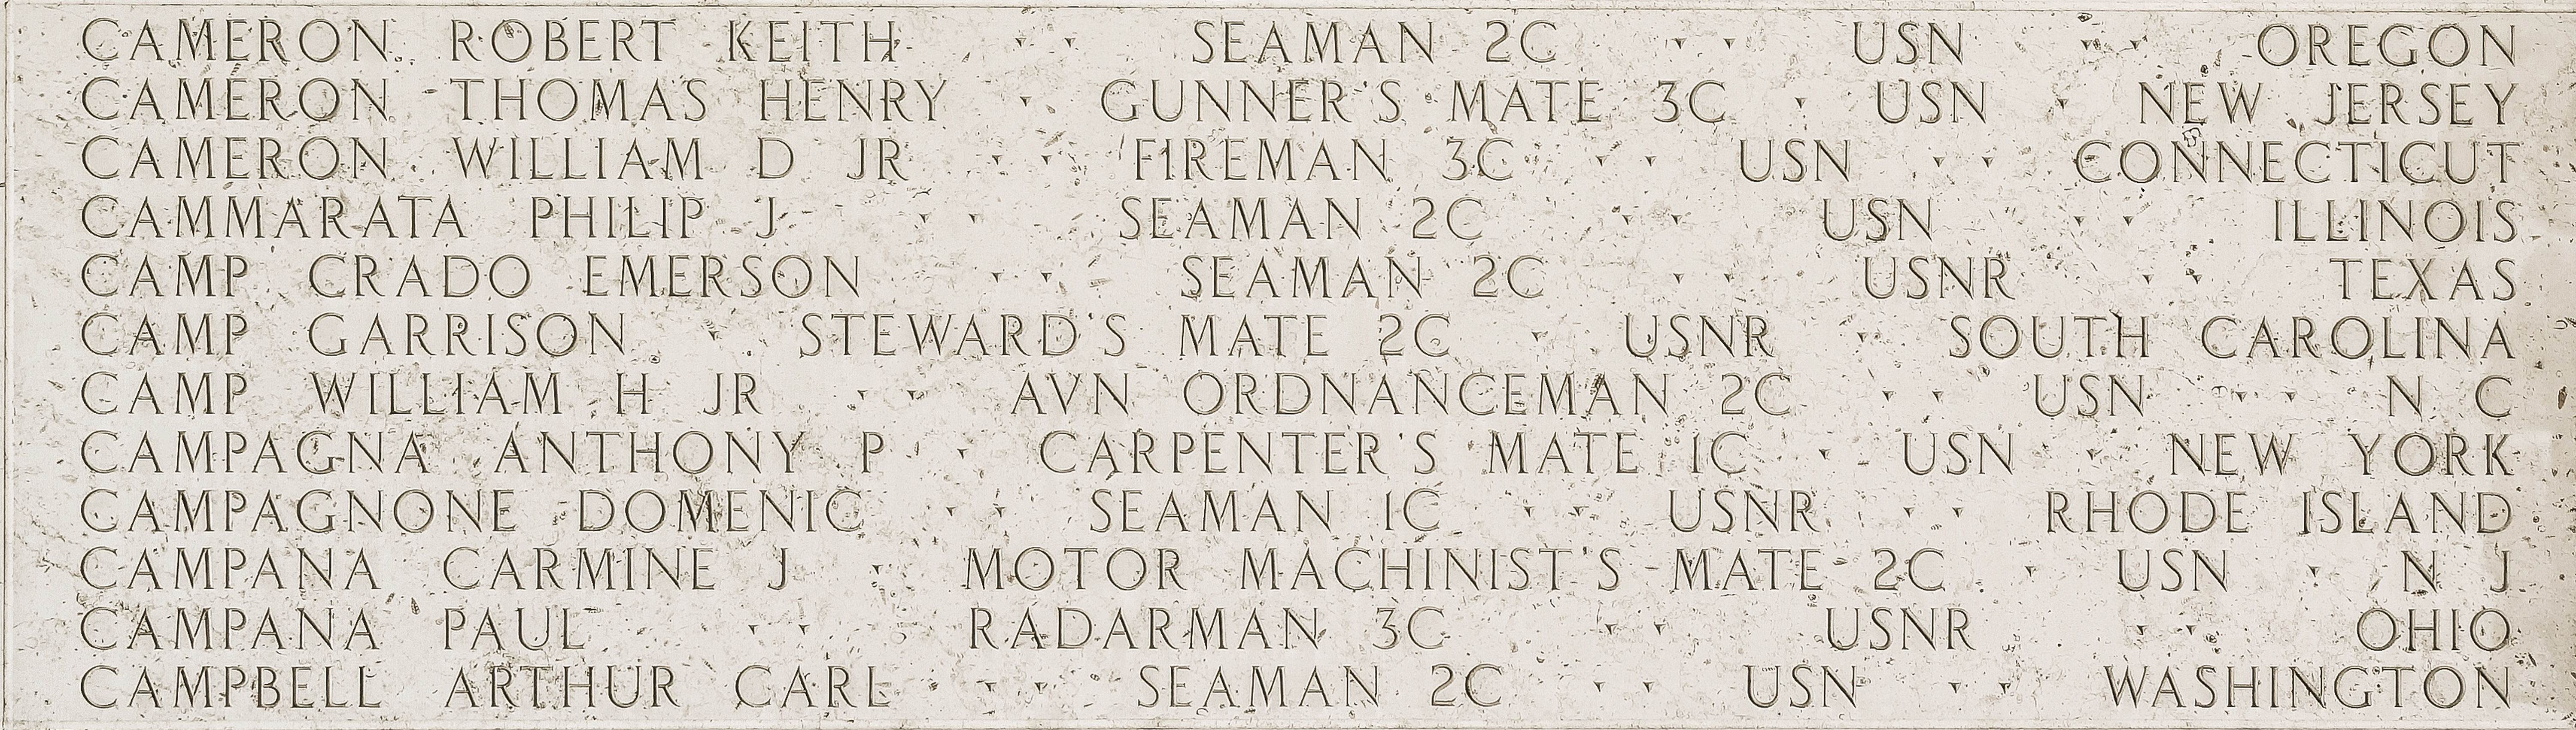 Crado Emerson Camp, Seaman Second Class